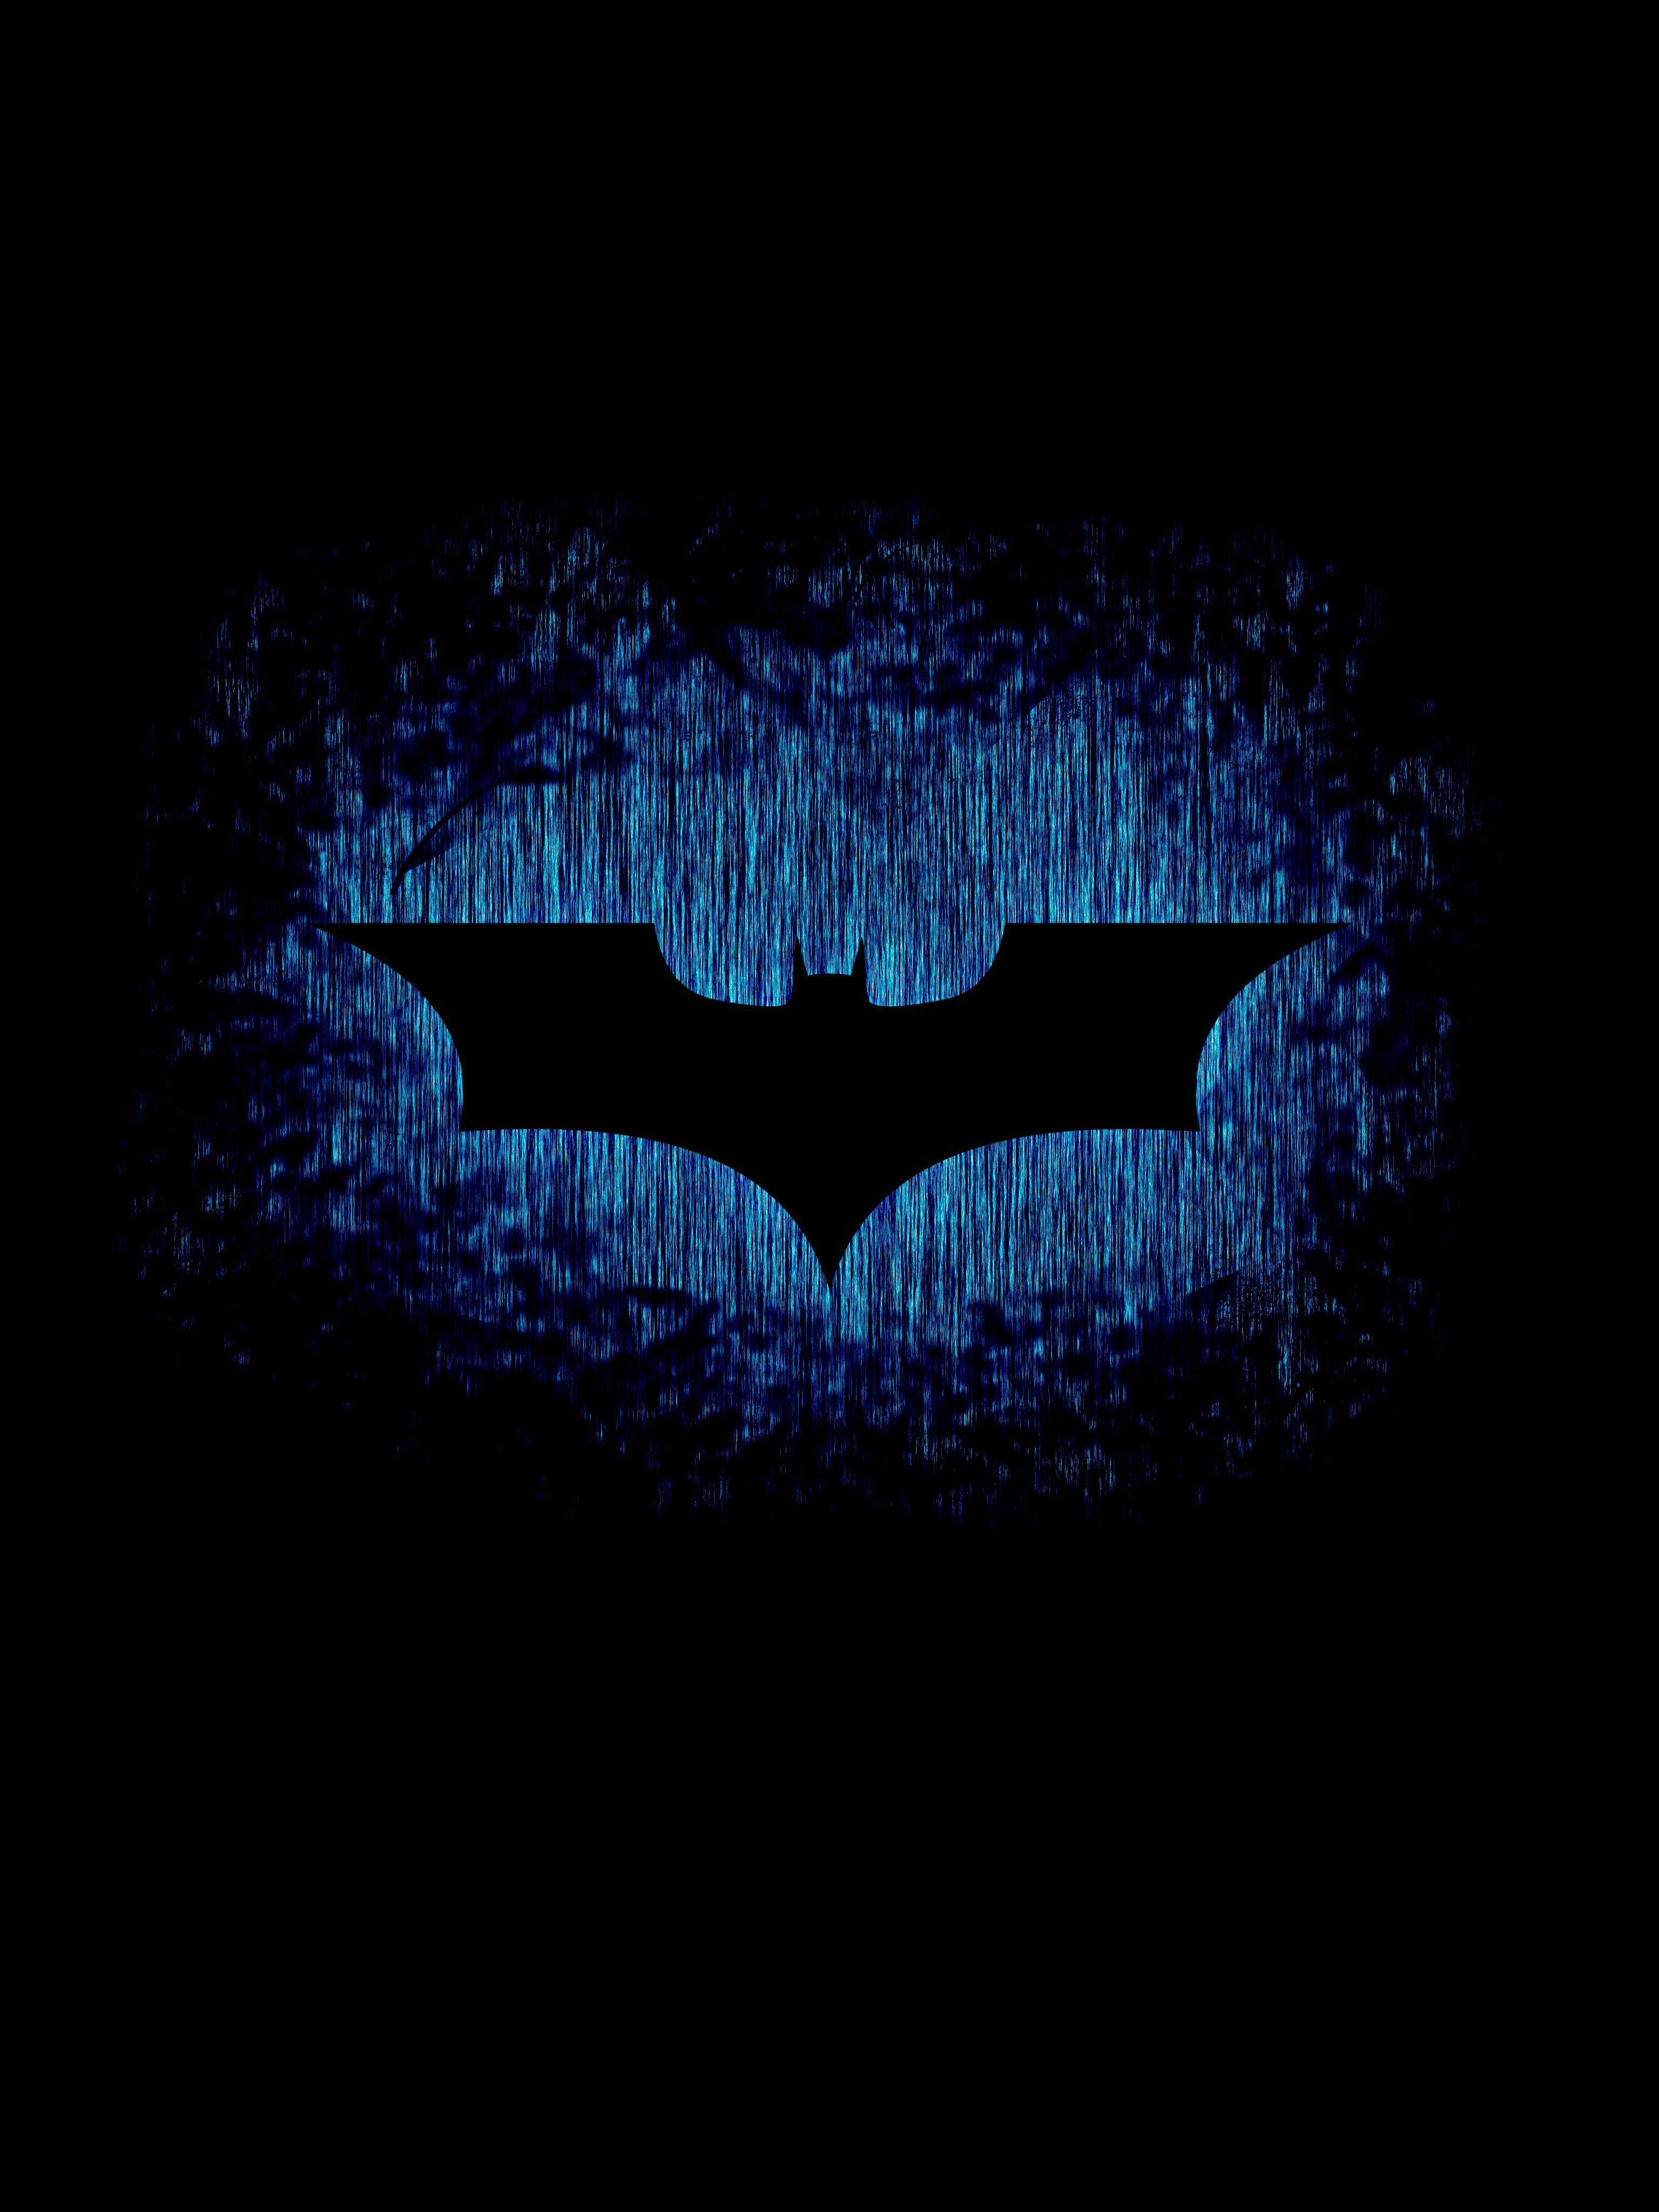 The Dark Knight Rises HD Wallpaper By Shikharsrivastava On